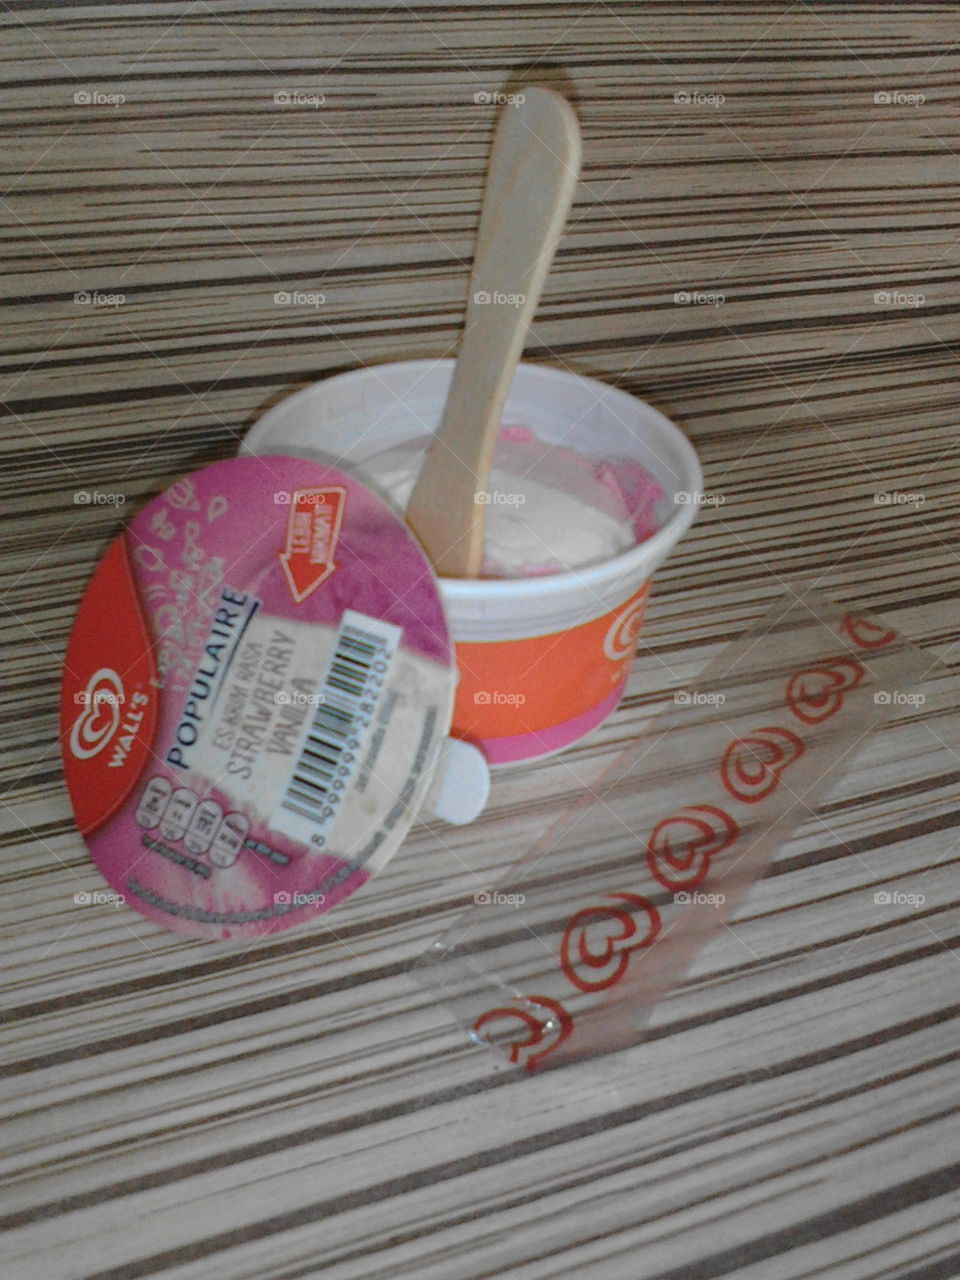 strawberry vanilla ice cream